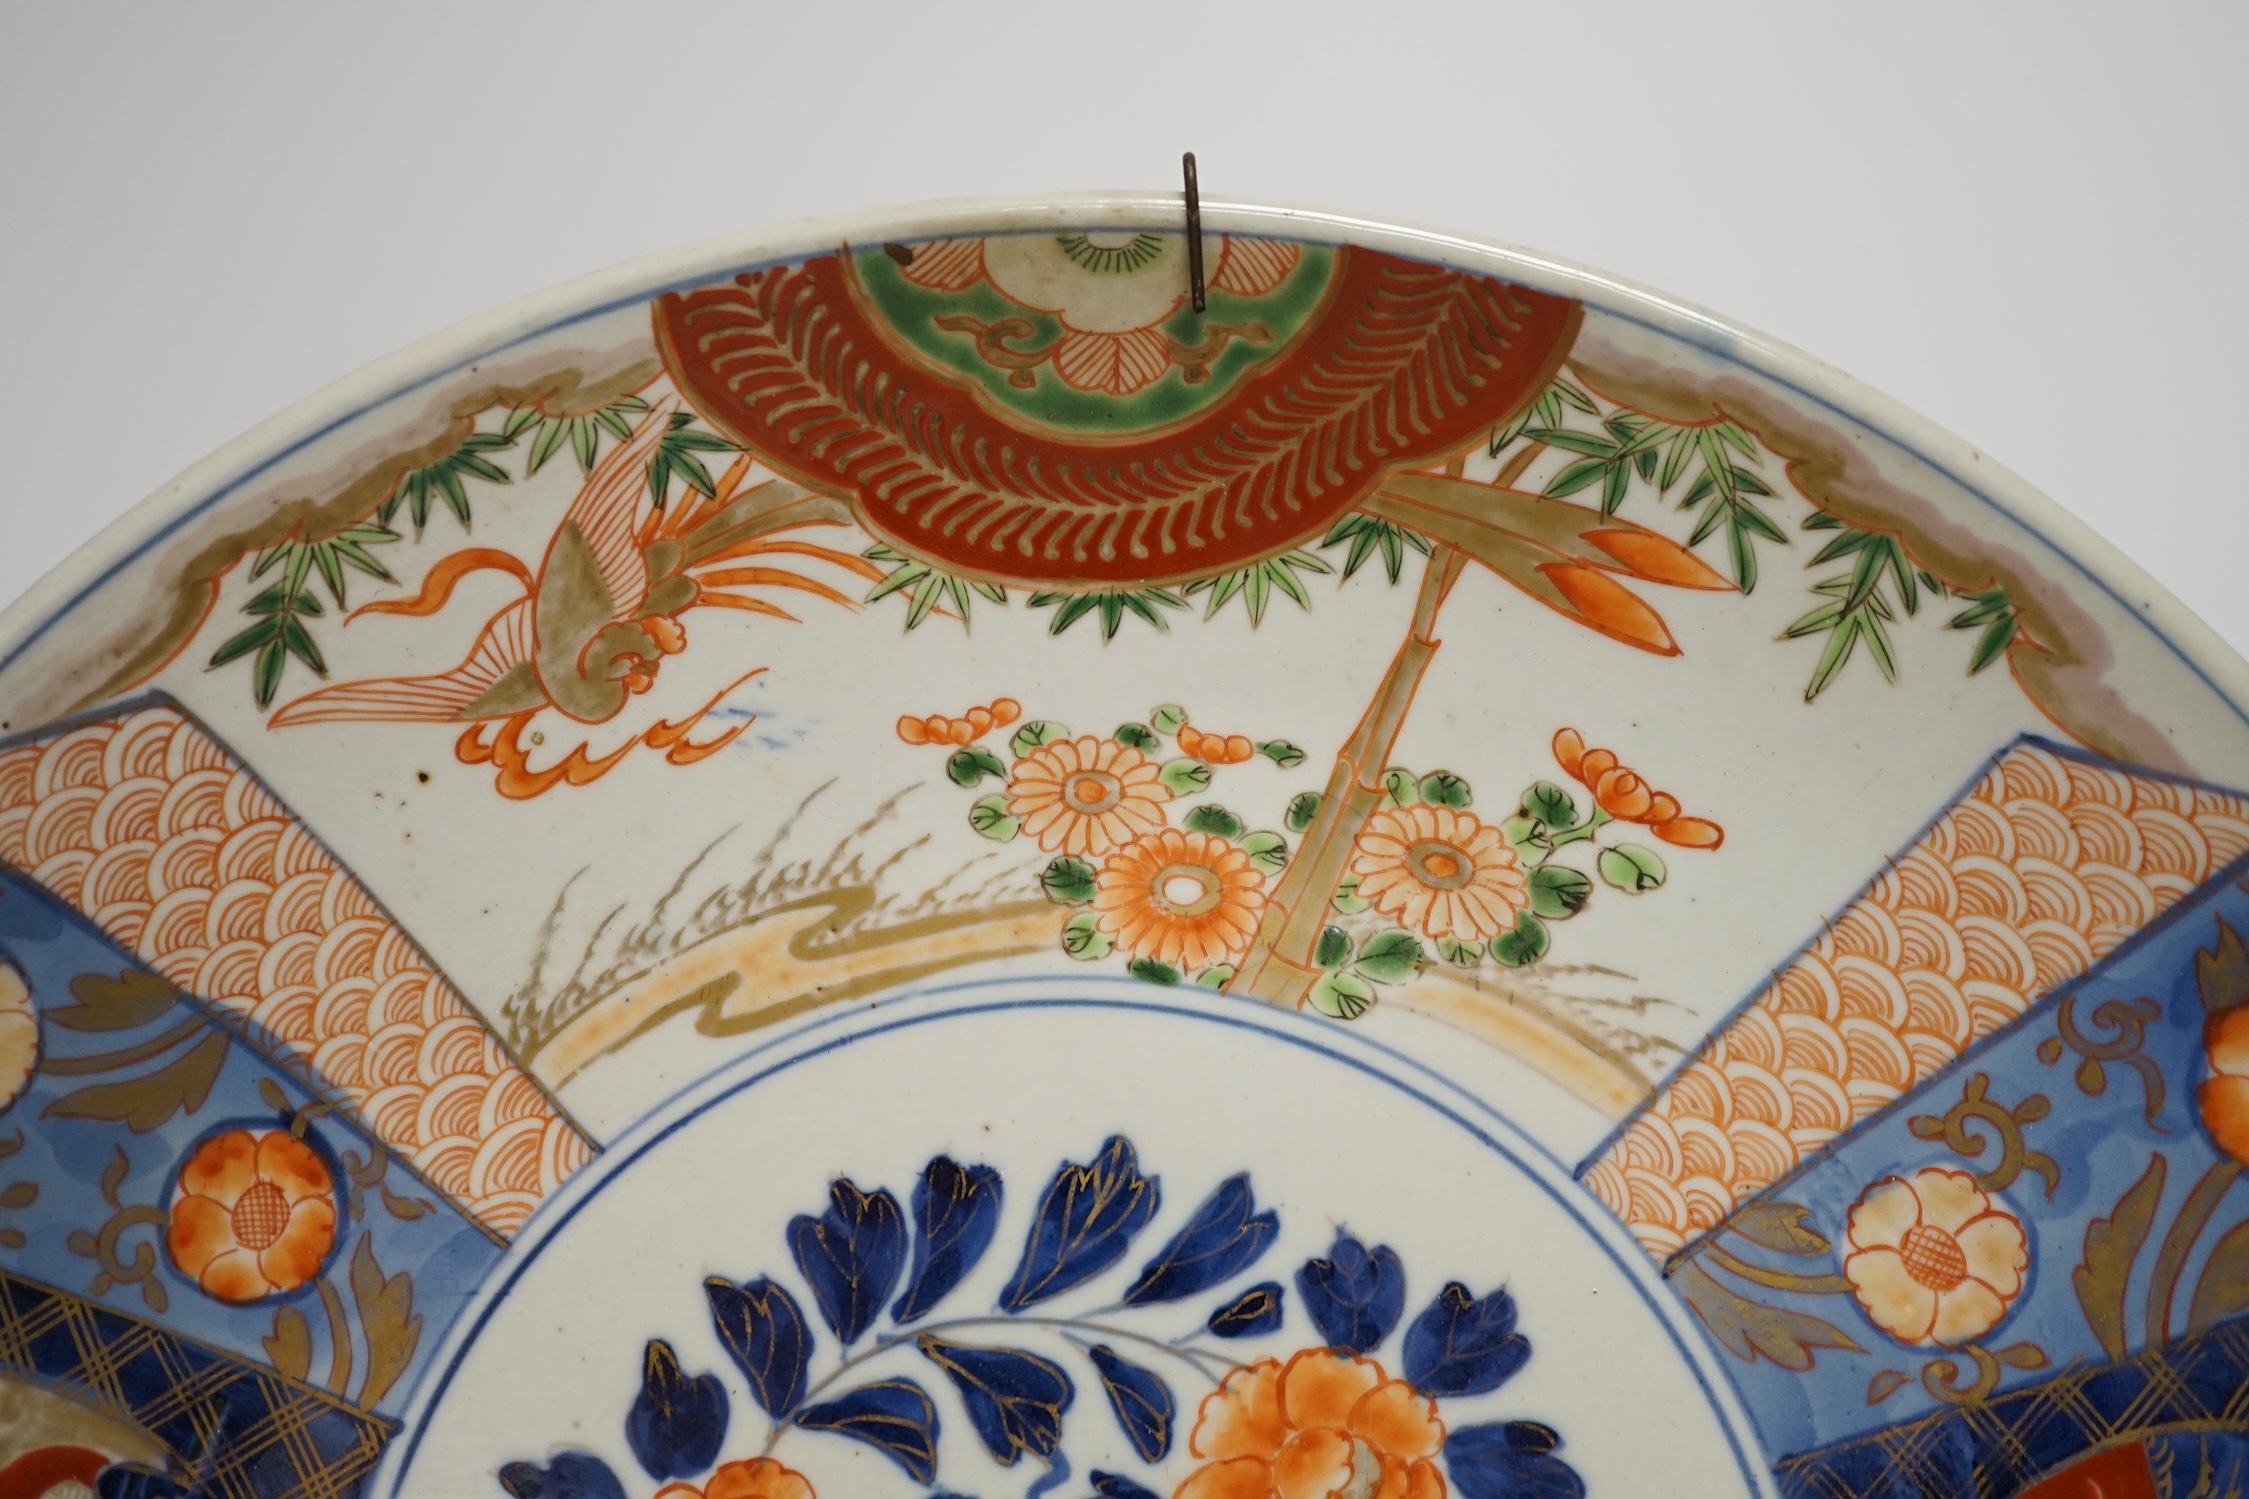 A pair of Japanese cloisonné enamel ‘dragon’ vases and a Japanese Imari dish, 39.5cm diameter (3). Condition - fair to good